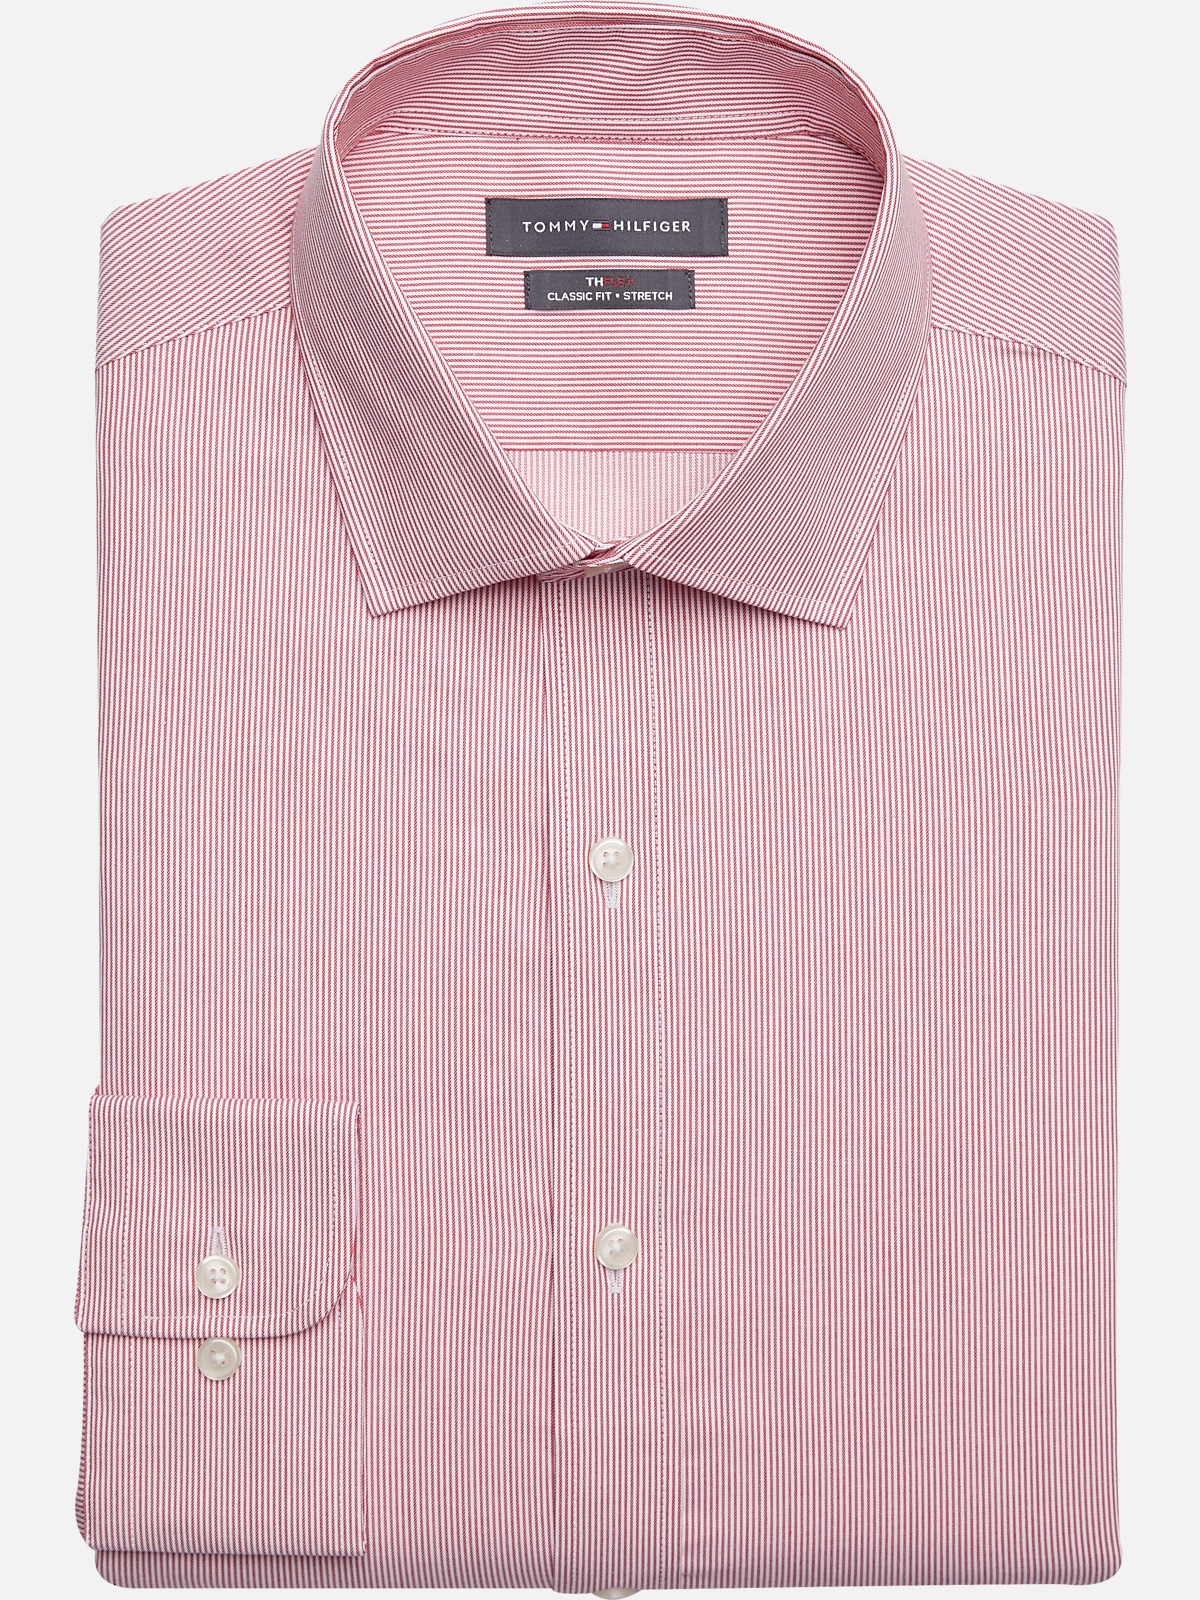 Tommy Hilfiger Flex Classic Fit Spread Collar Dress Shirt, Work